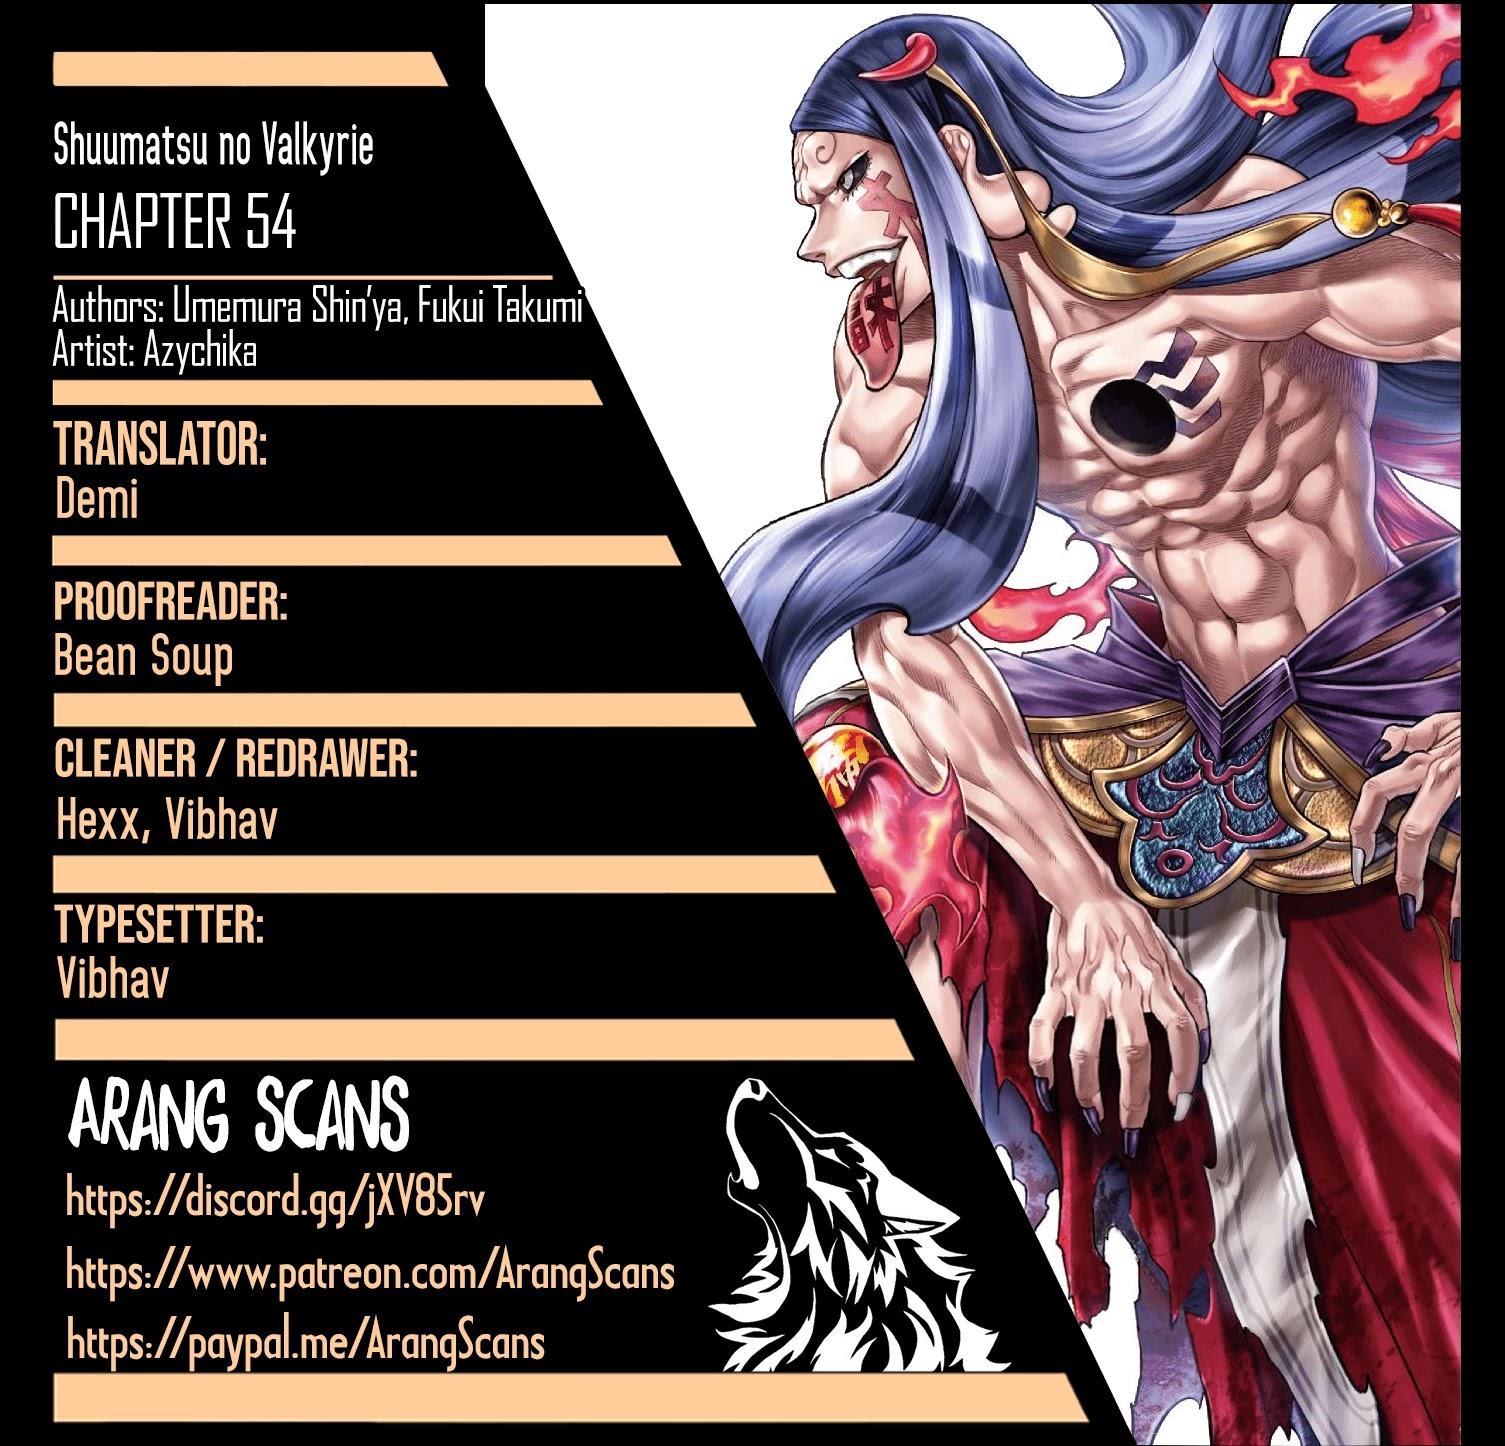 Record of Ragnarok, Vol.4: Justice Vs Evil by Azychika